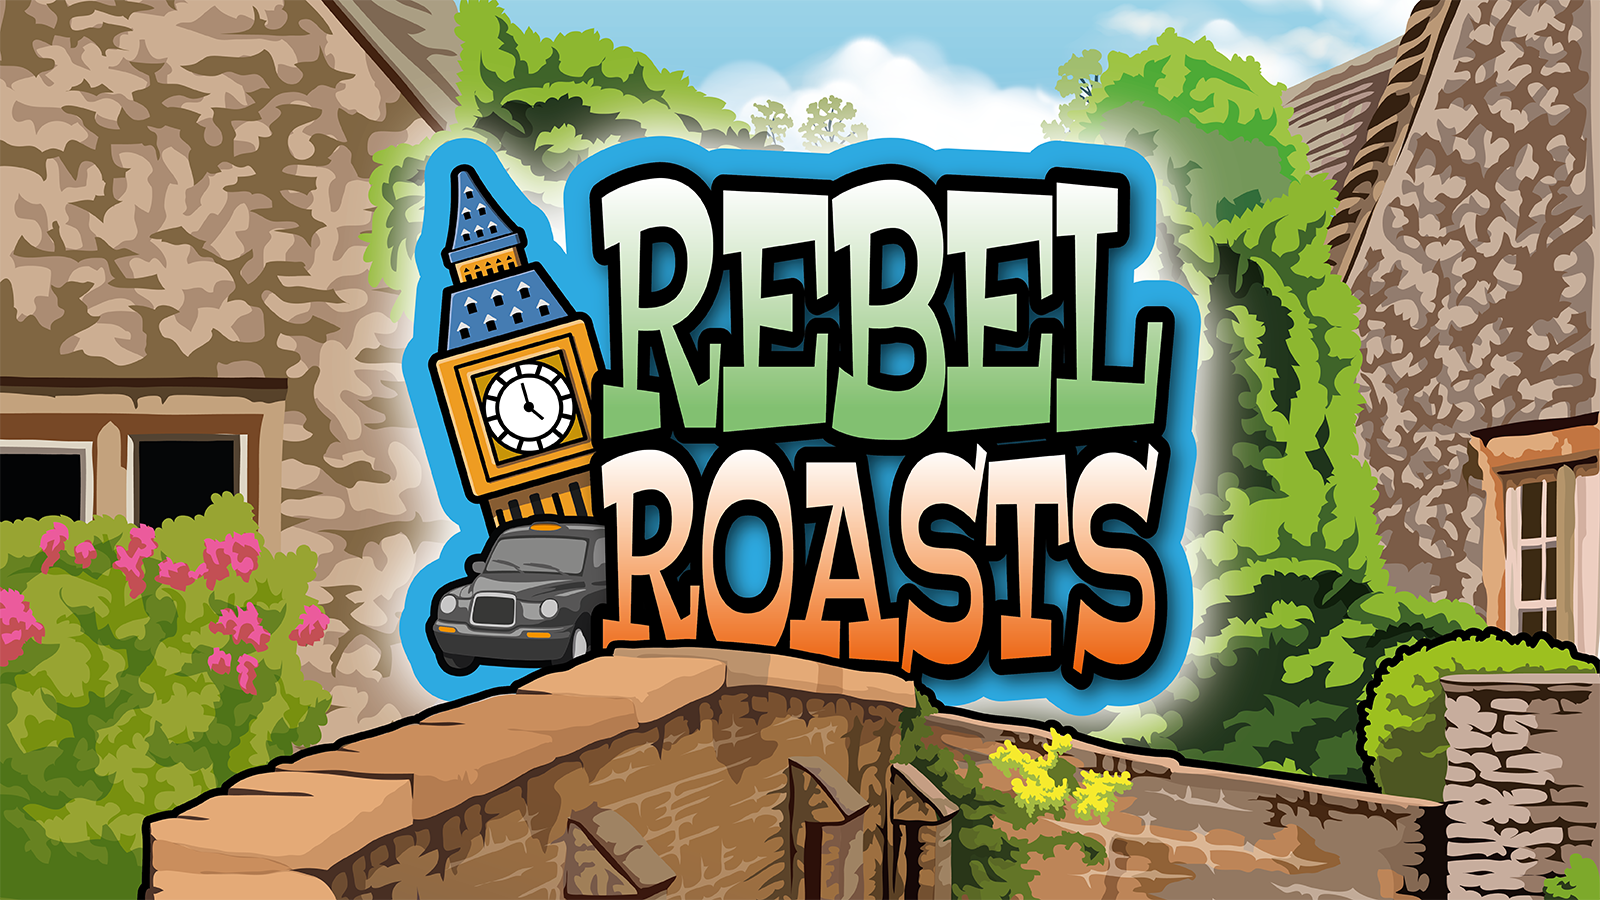 Rebel roasts